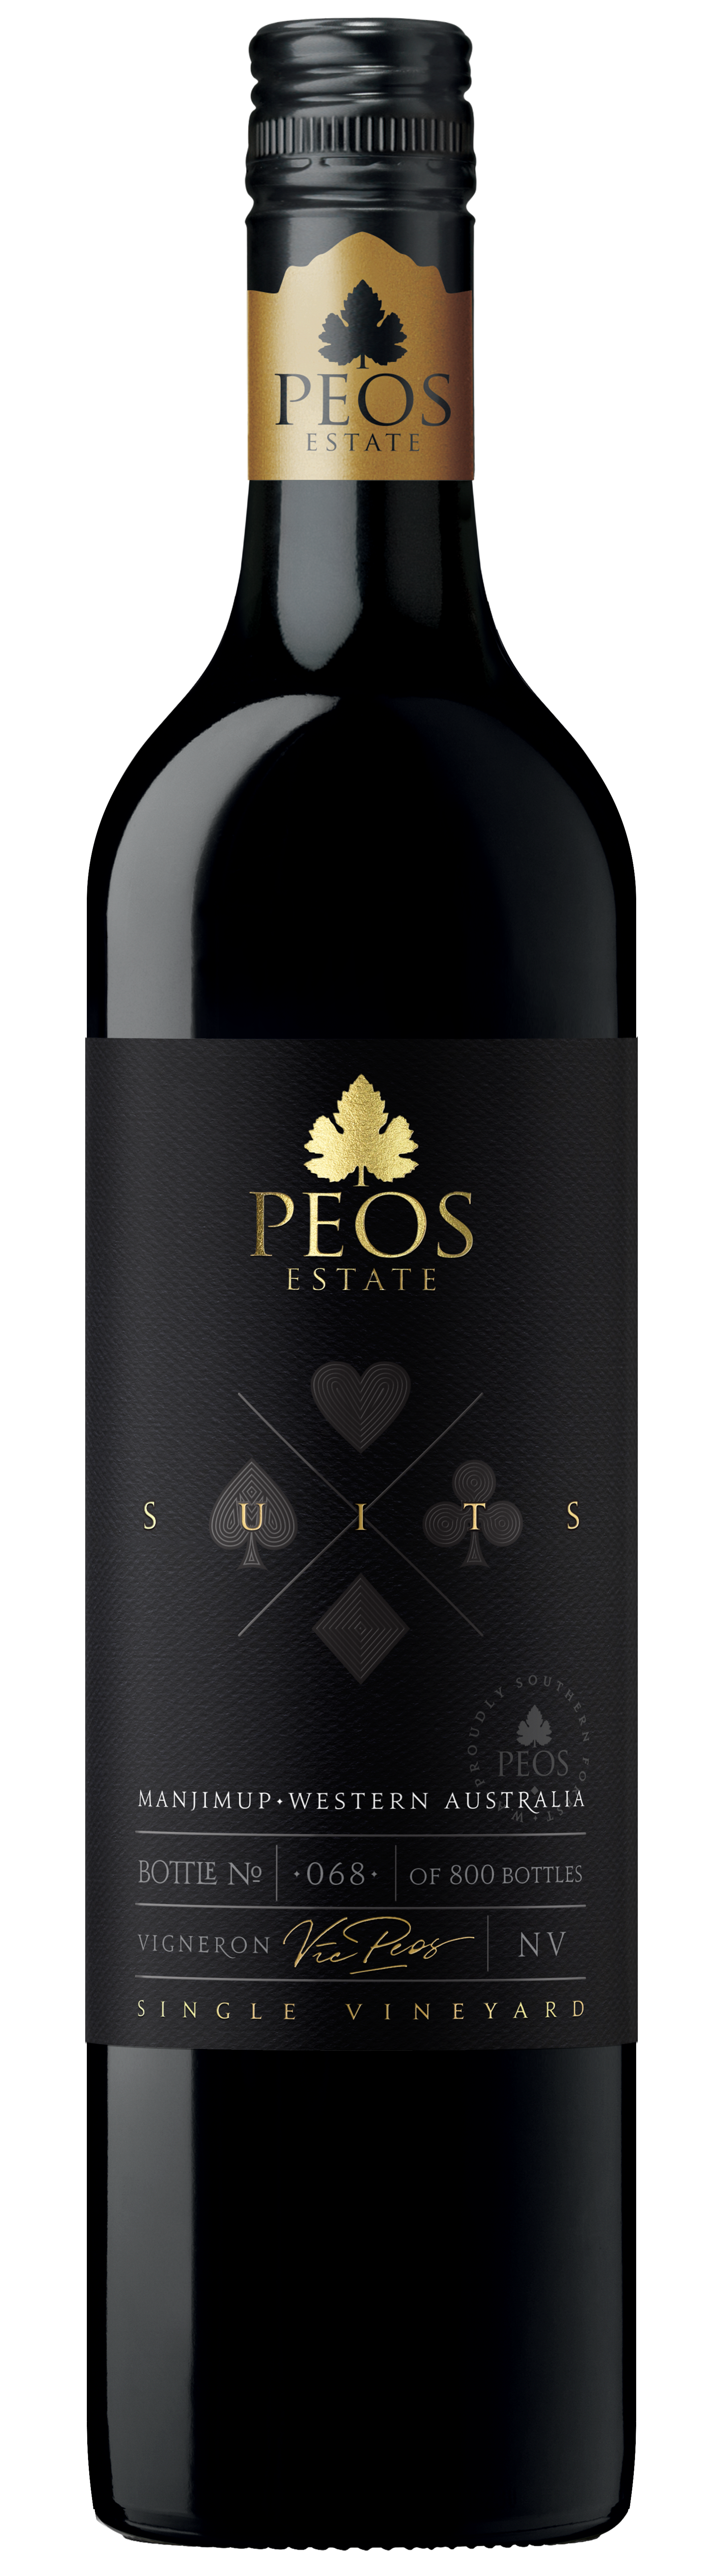 Peos Estate - Suits Single Vineyard Shiraz Cabernet 2018